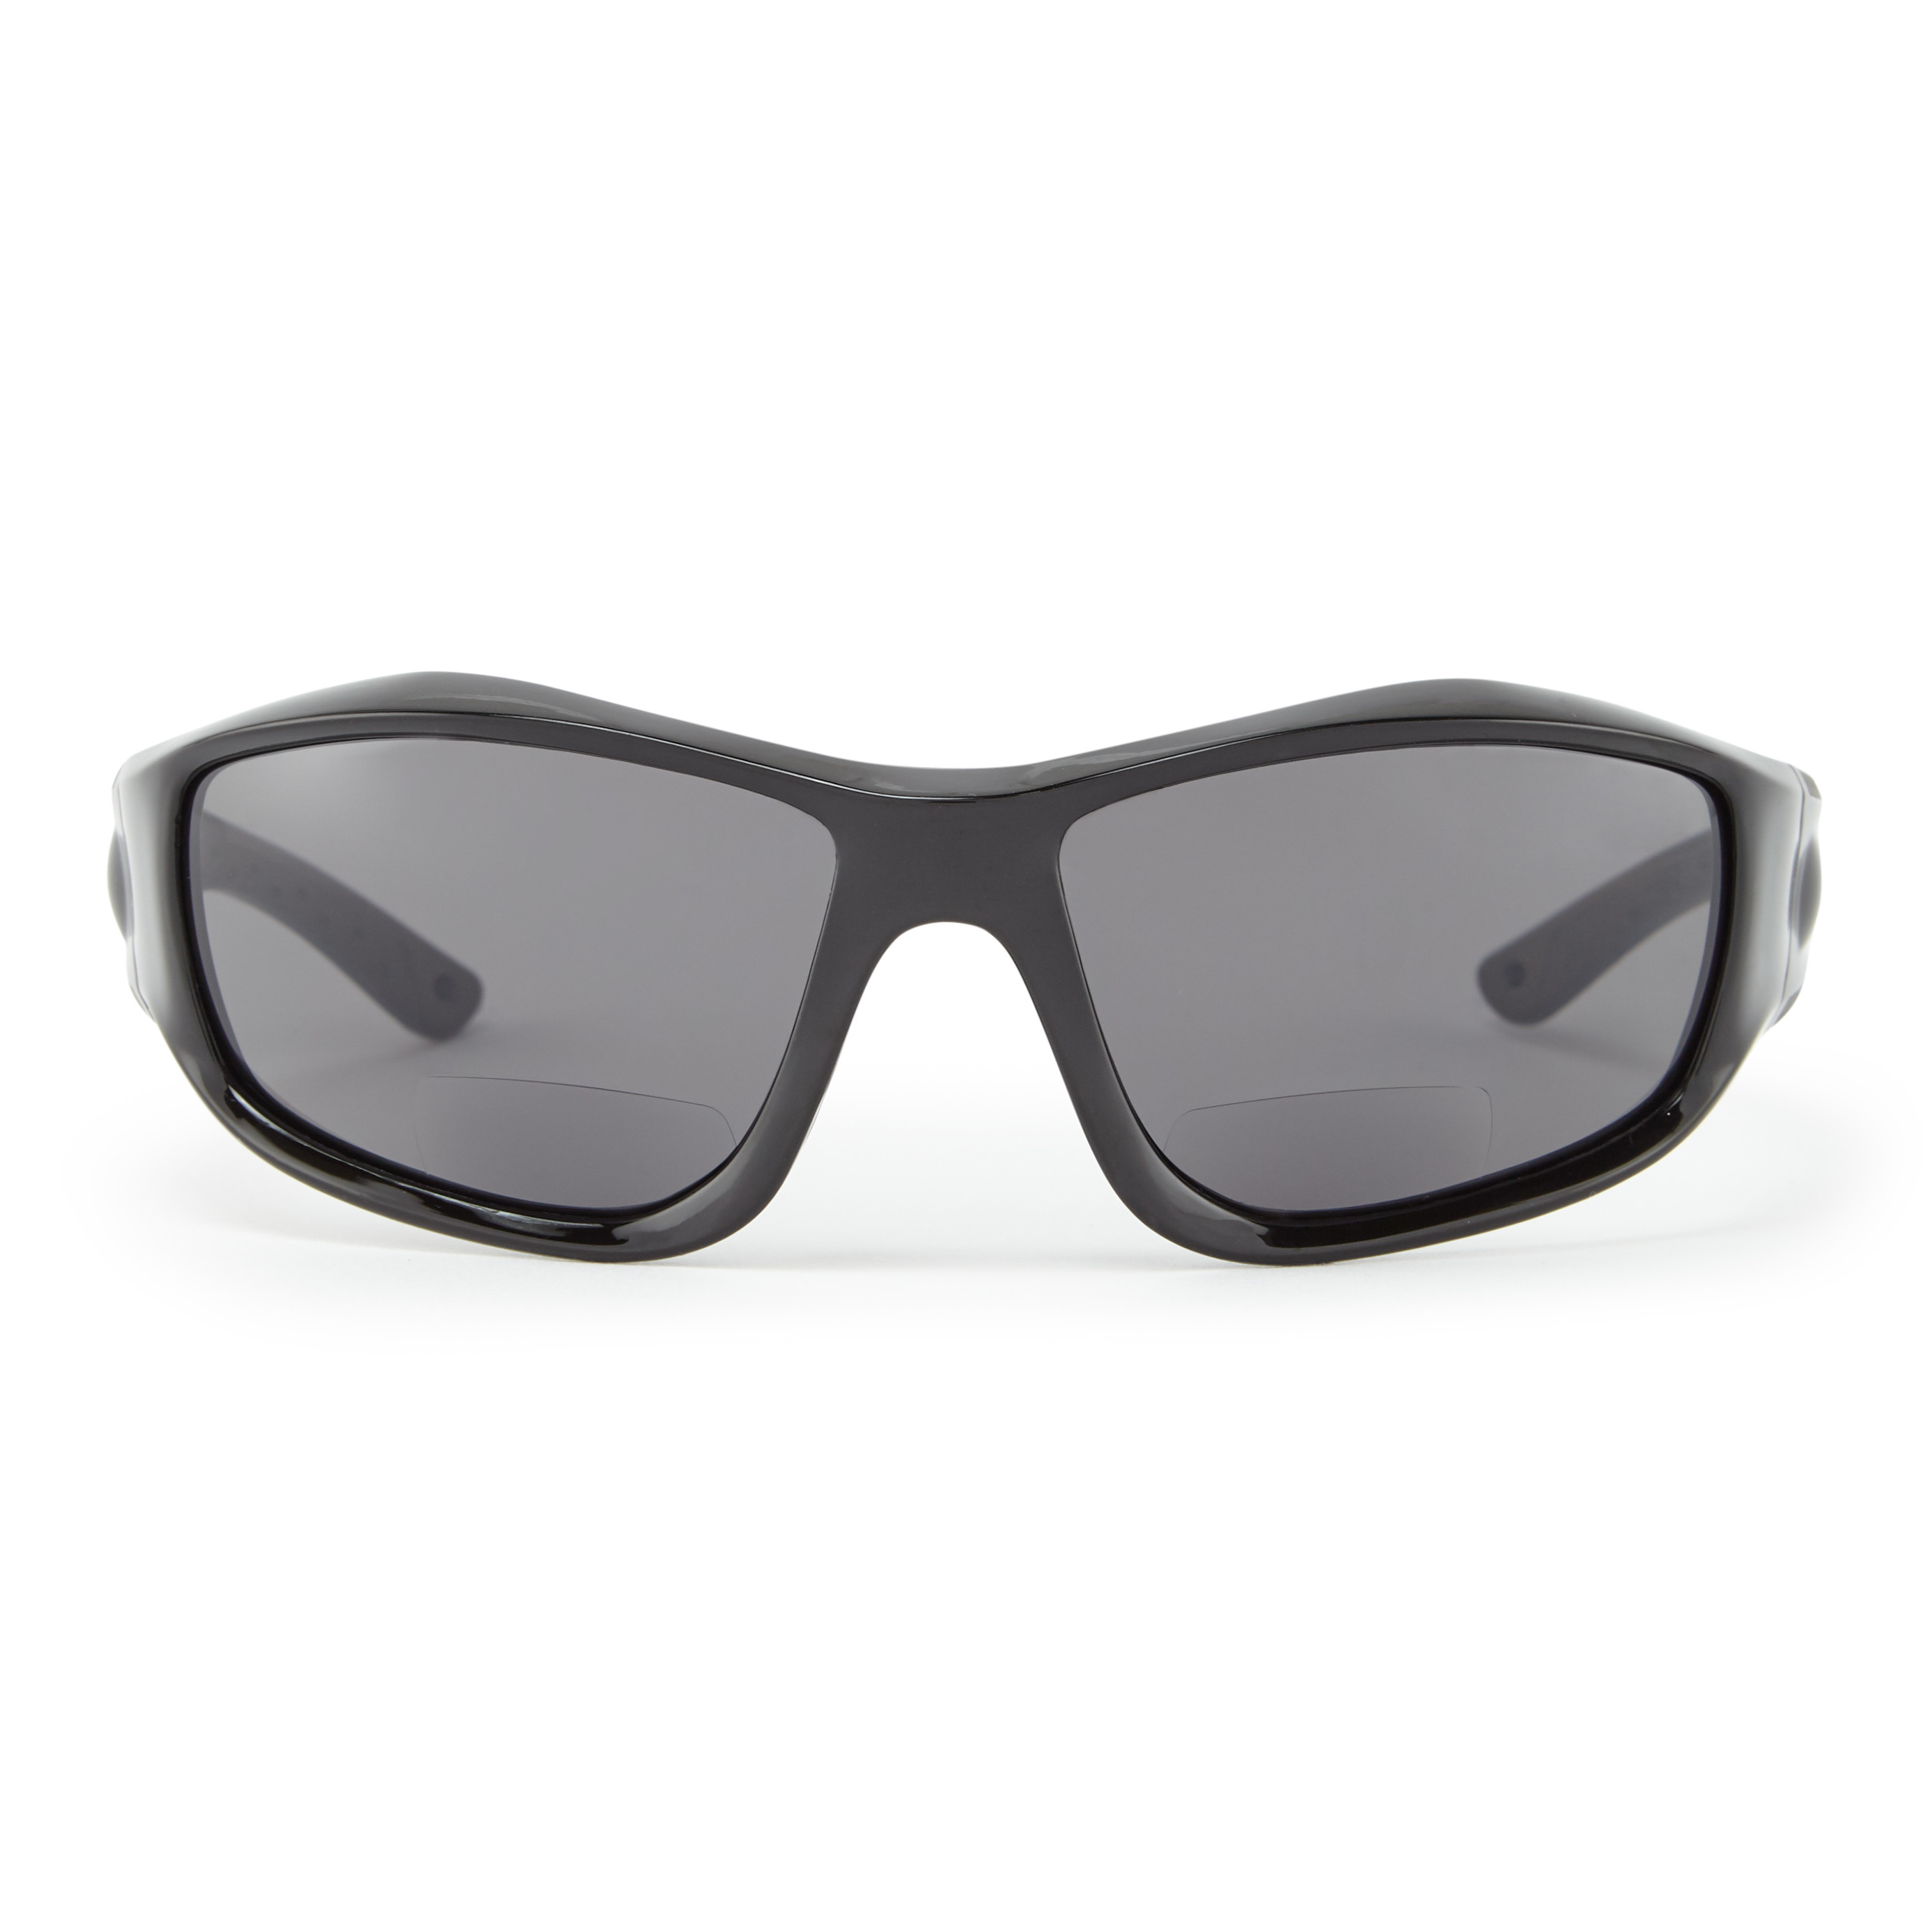  Race Vision Bi-Focal Sunglasses